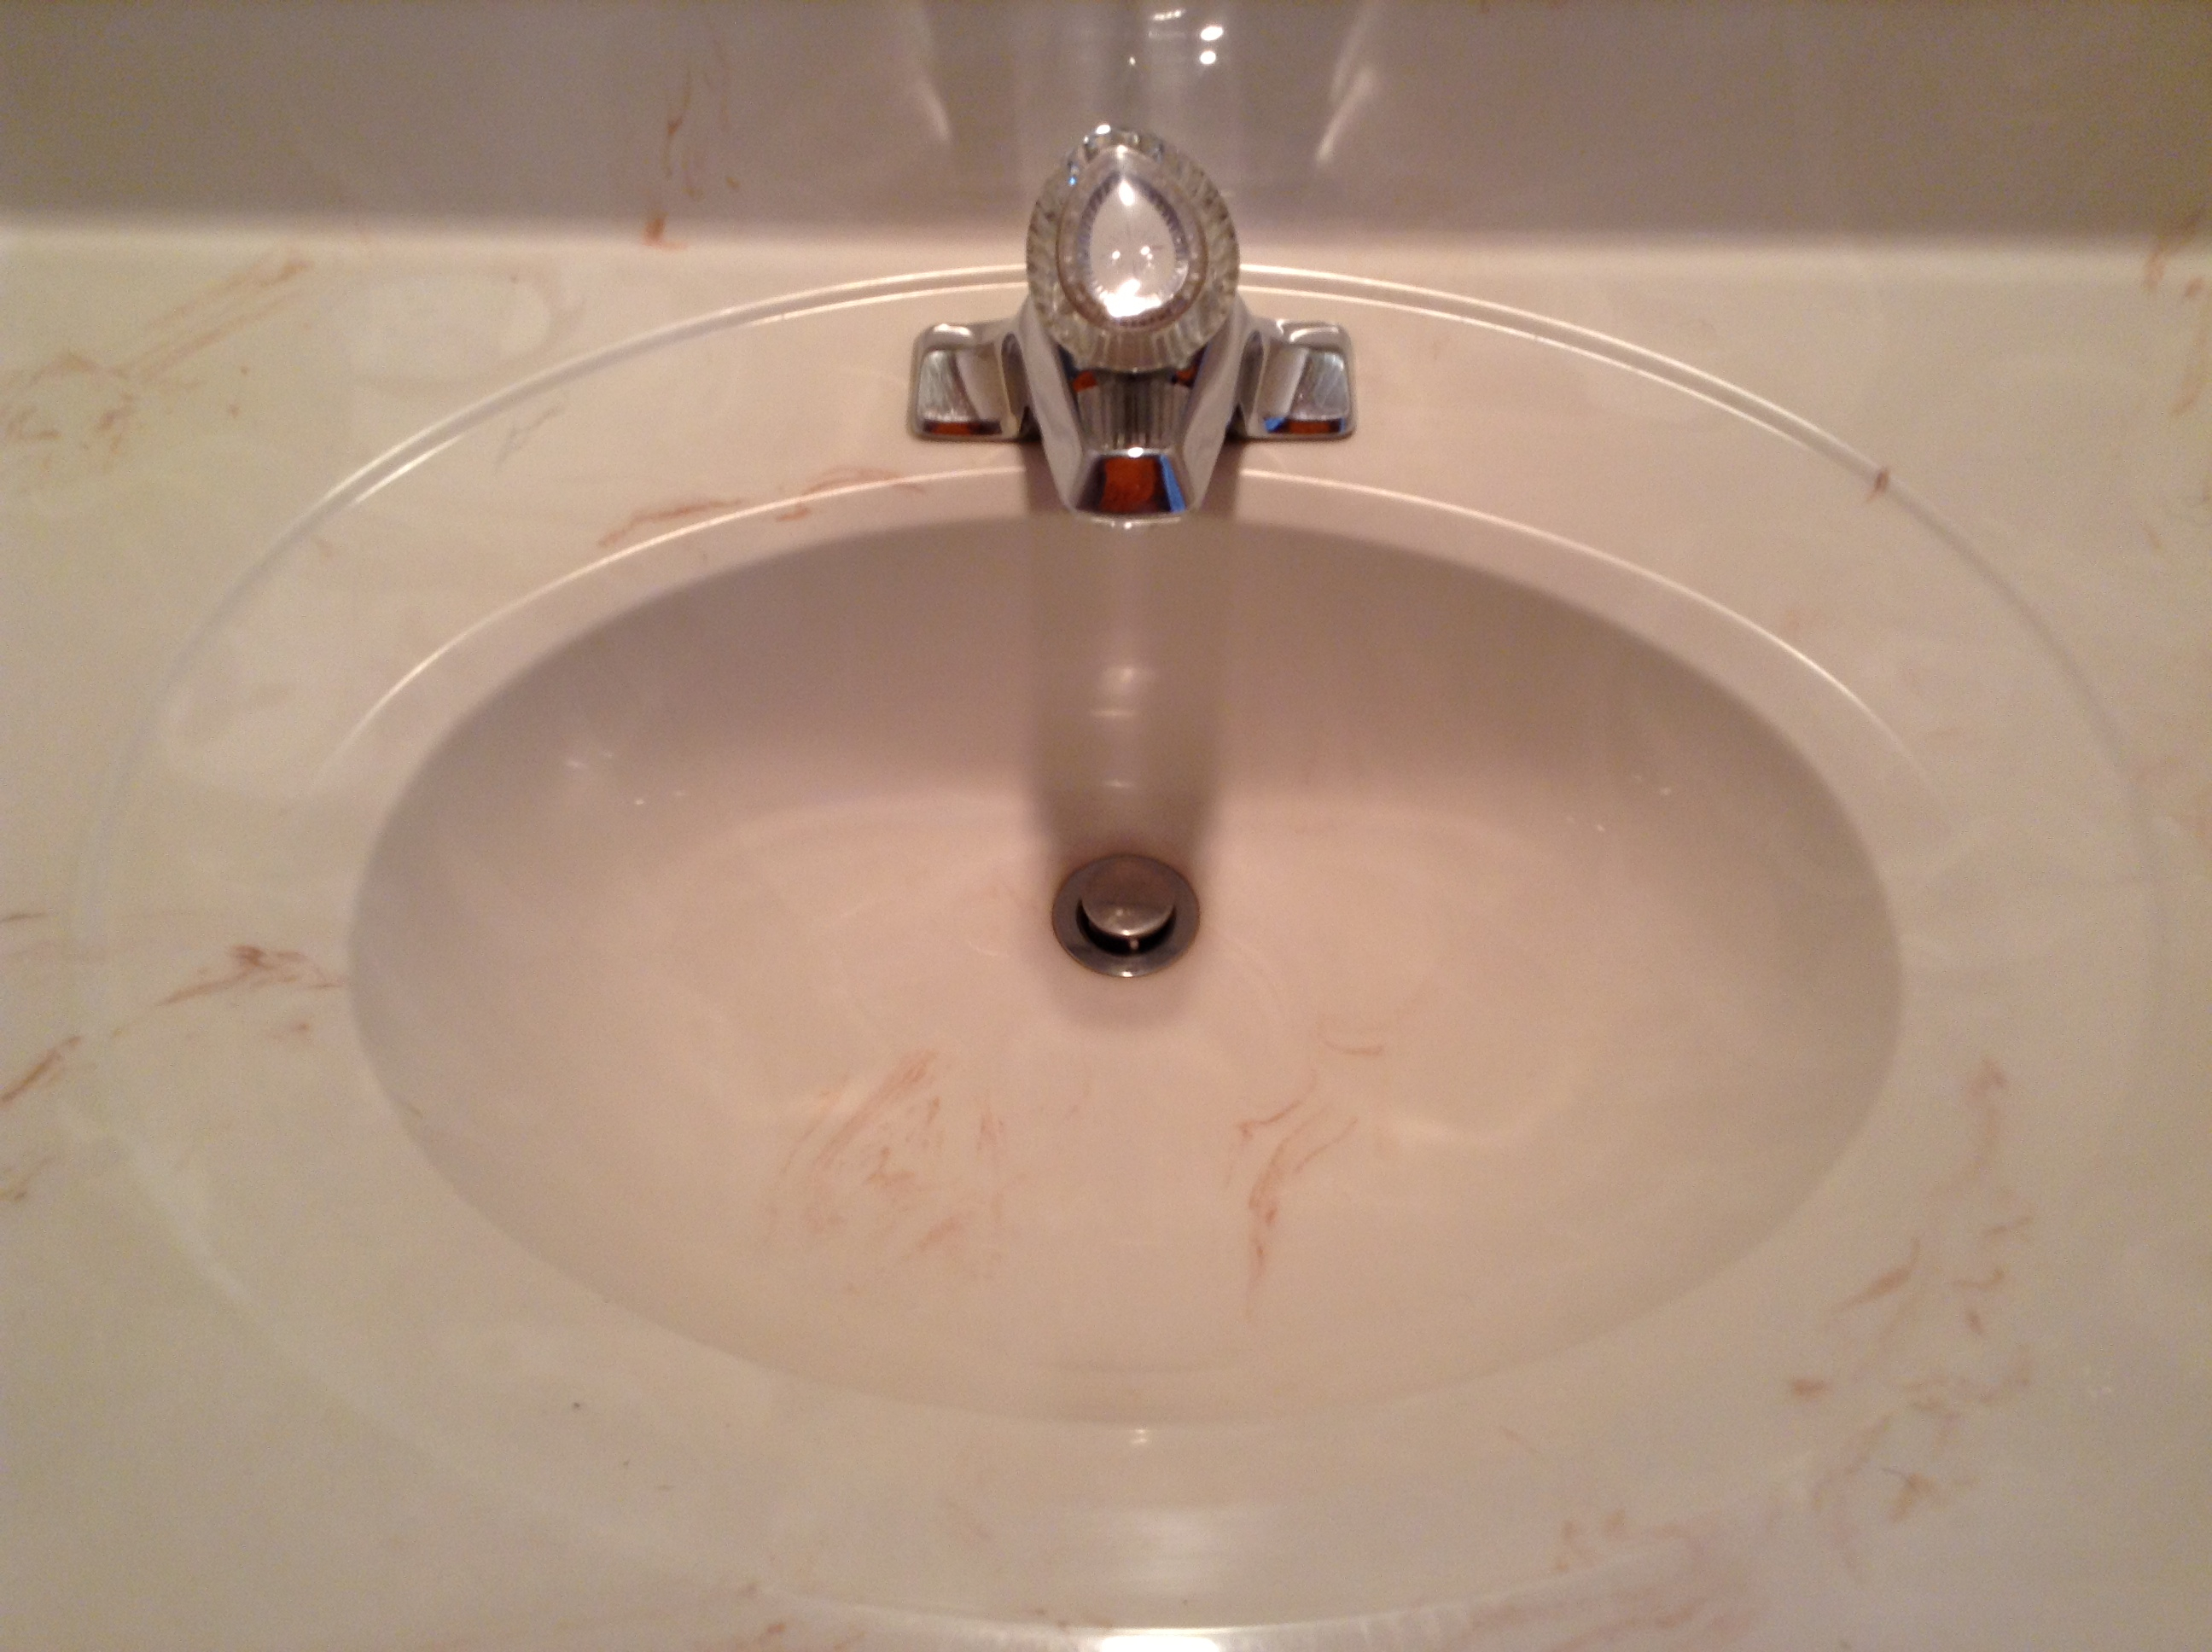 bacteria found in bathroom sinks